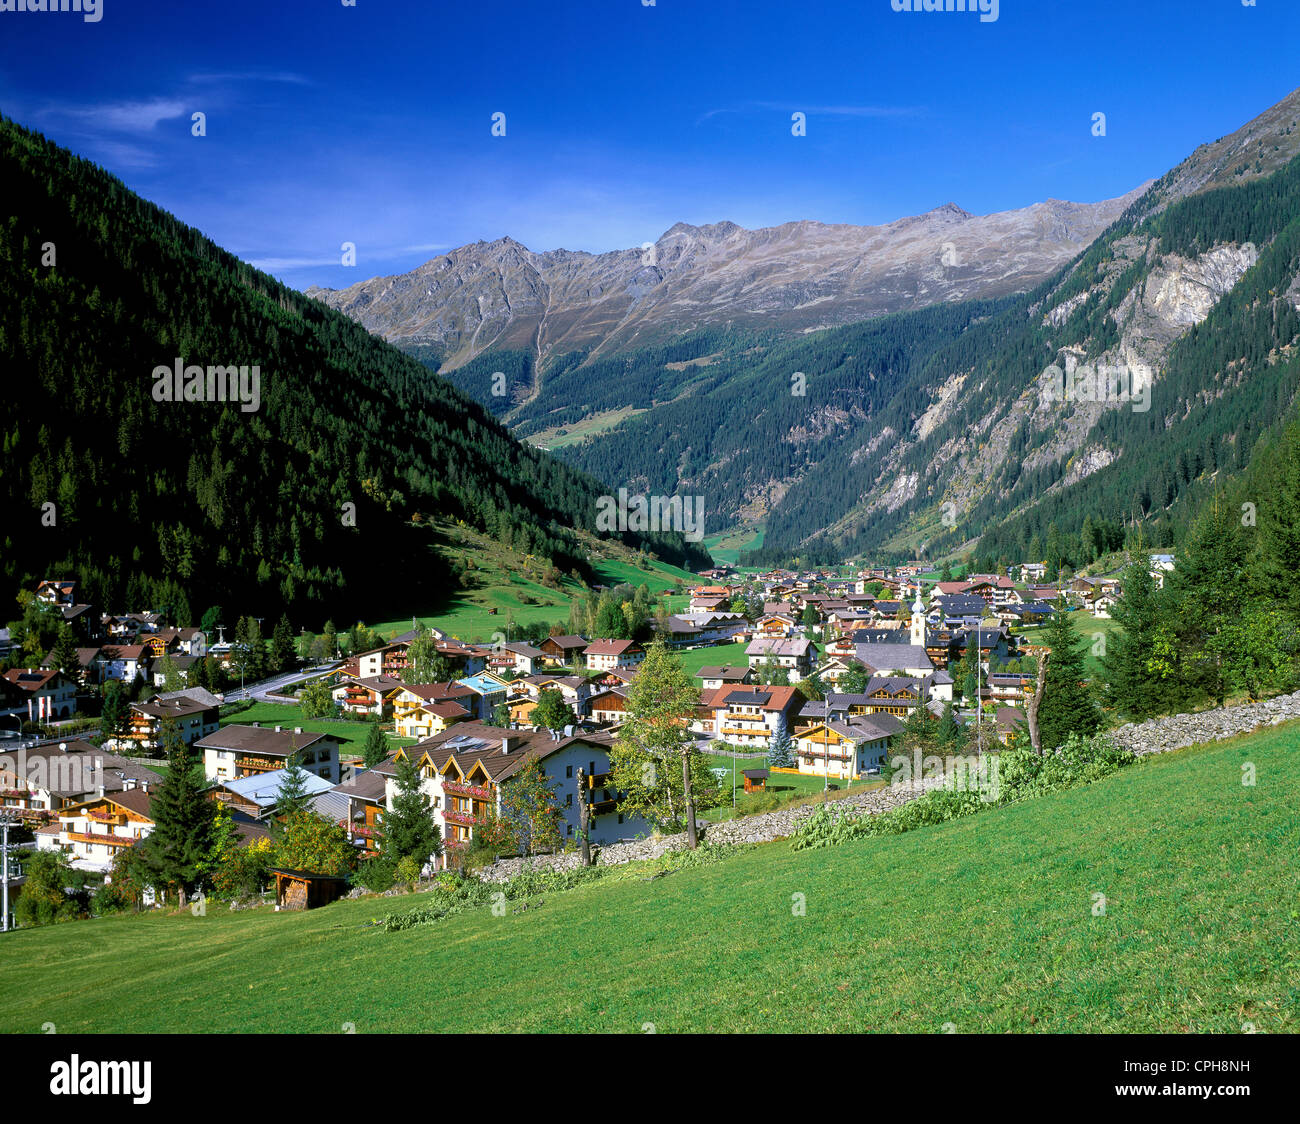 Austria, Europe, Tyrol, uplands, kaunertal, feichten, tourism, travel, mountains, ötztal alps Stock Photo